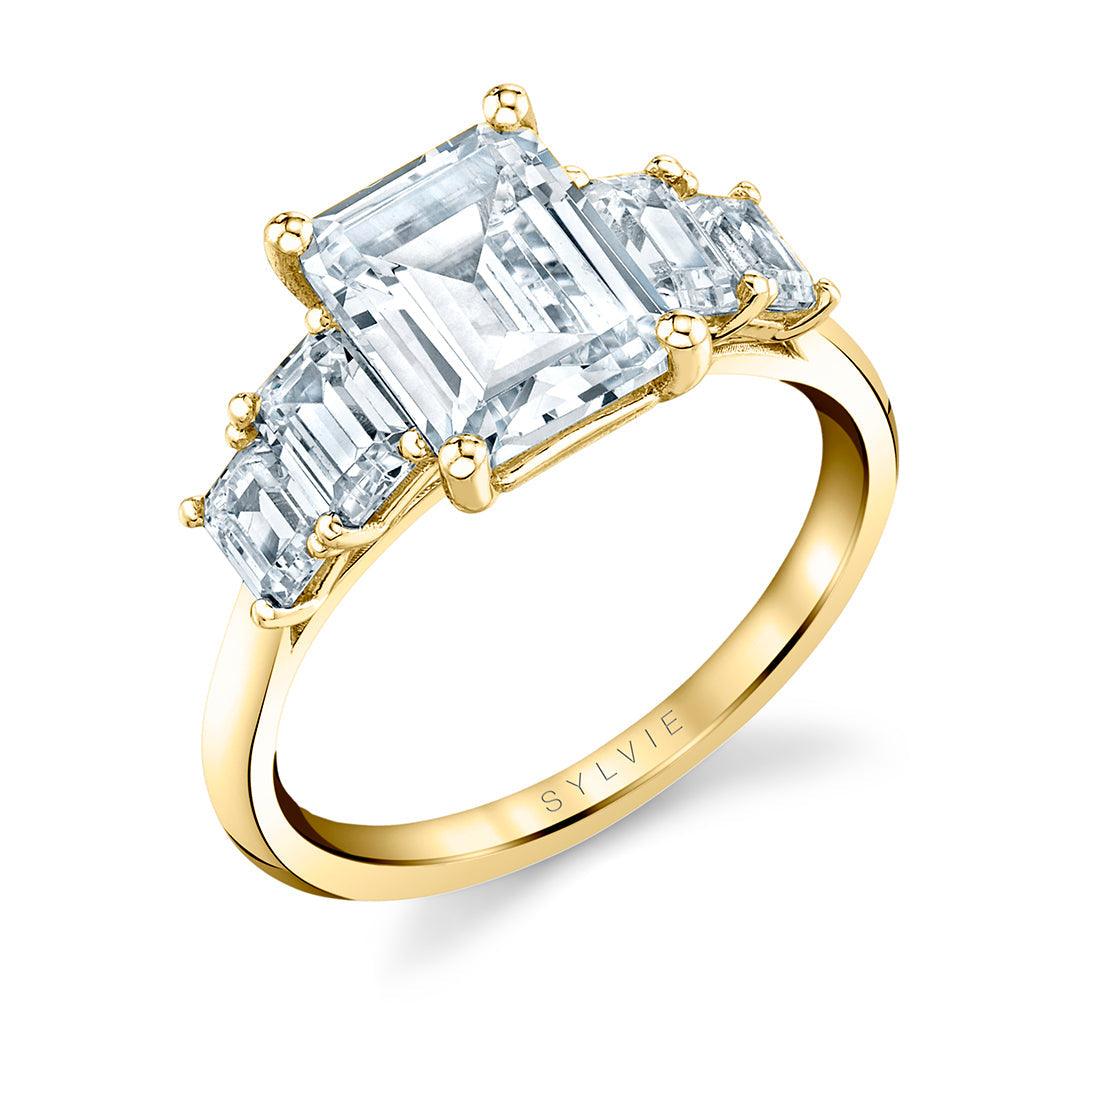 18K Brenley Emerald Cut Engagement Ring - Water Street Jewelers